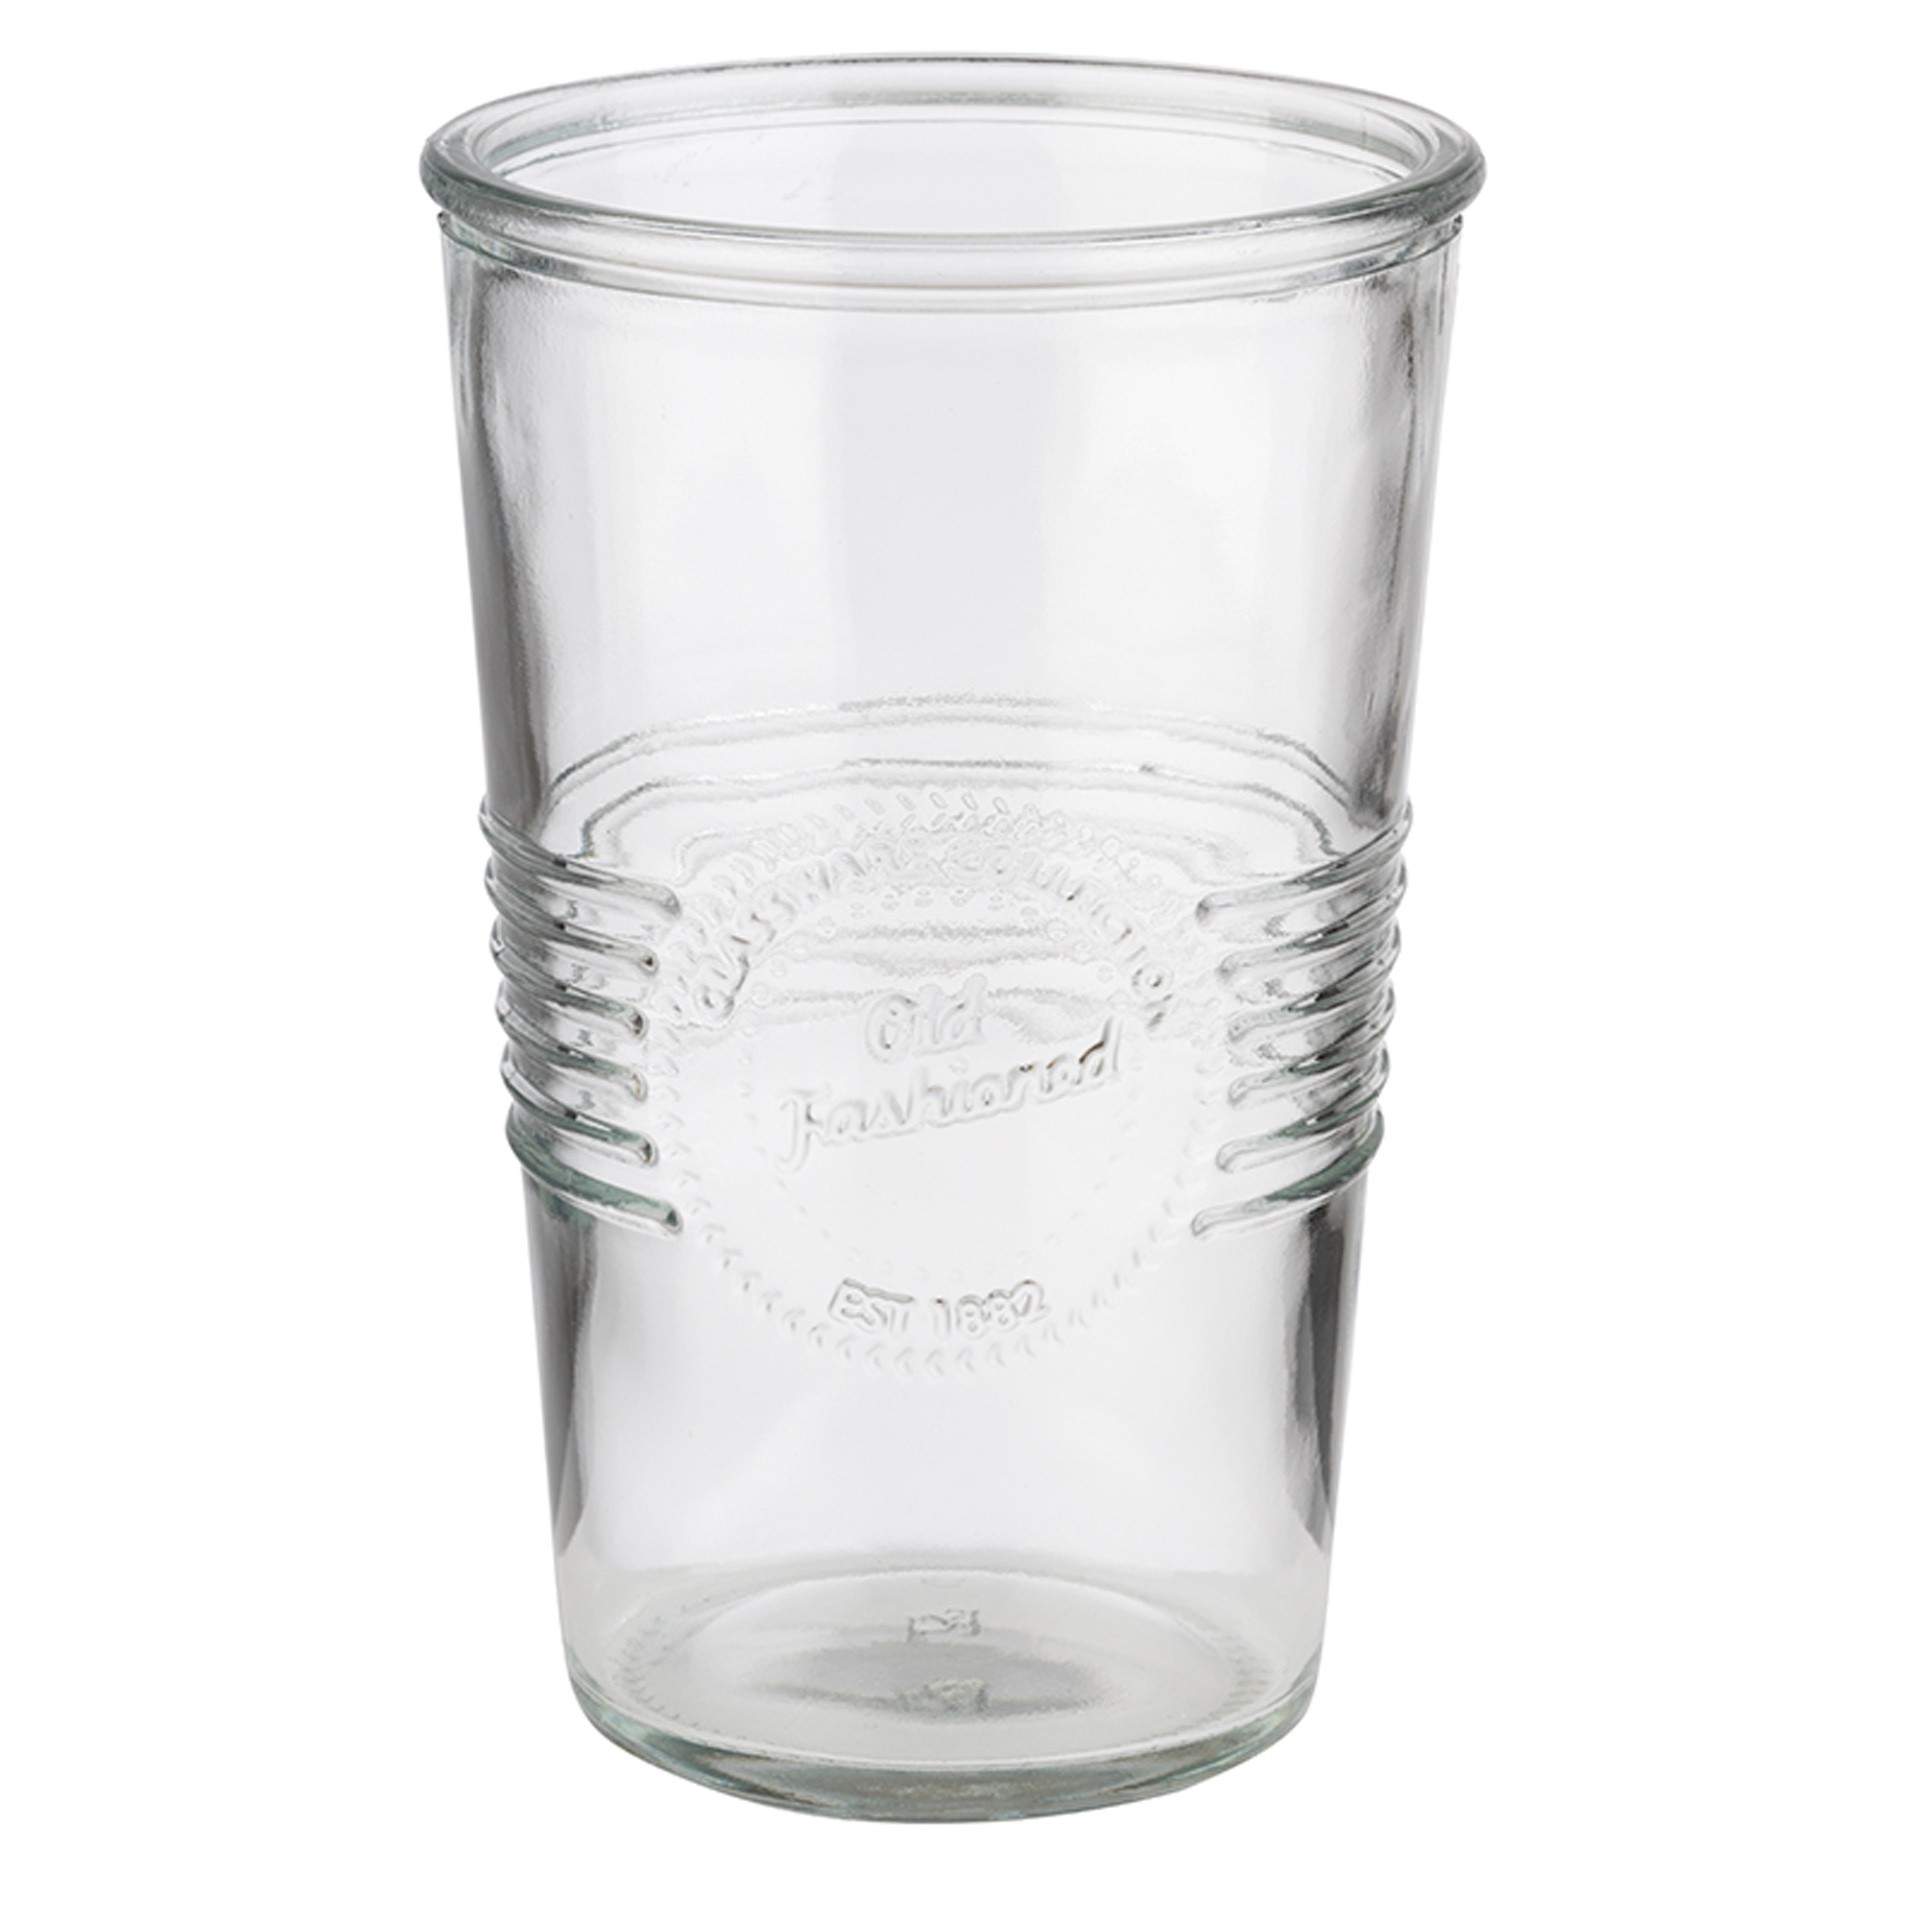 Trinkglas - Serie Old Fashioned - klar - Abm. 12,5 cm - Ø 8,0 cm - Inhalt 0,30 l - Glas - 10520-B